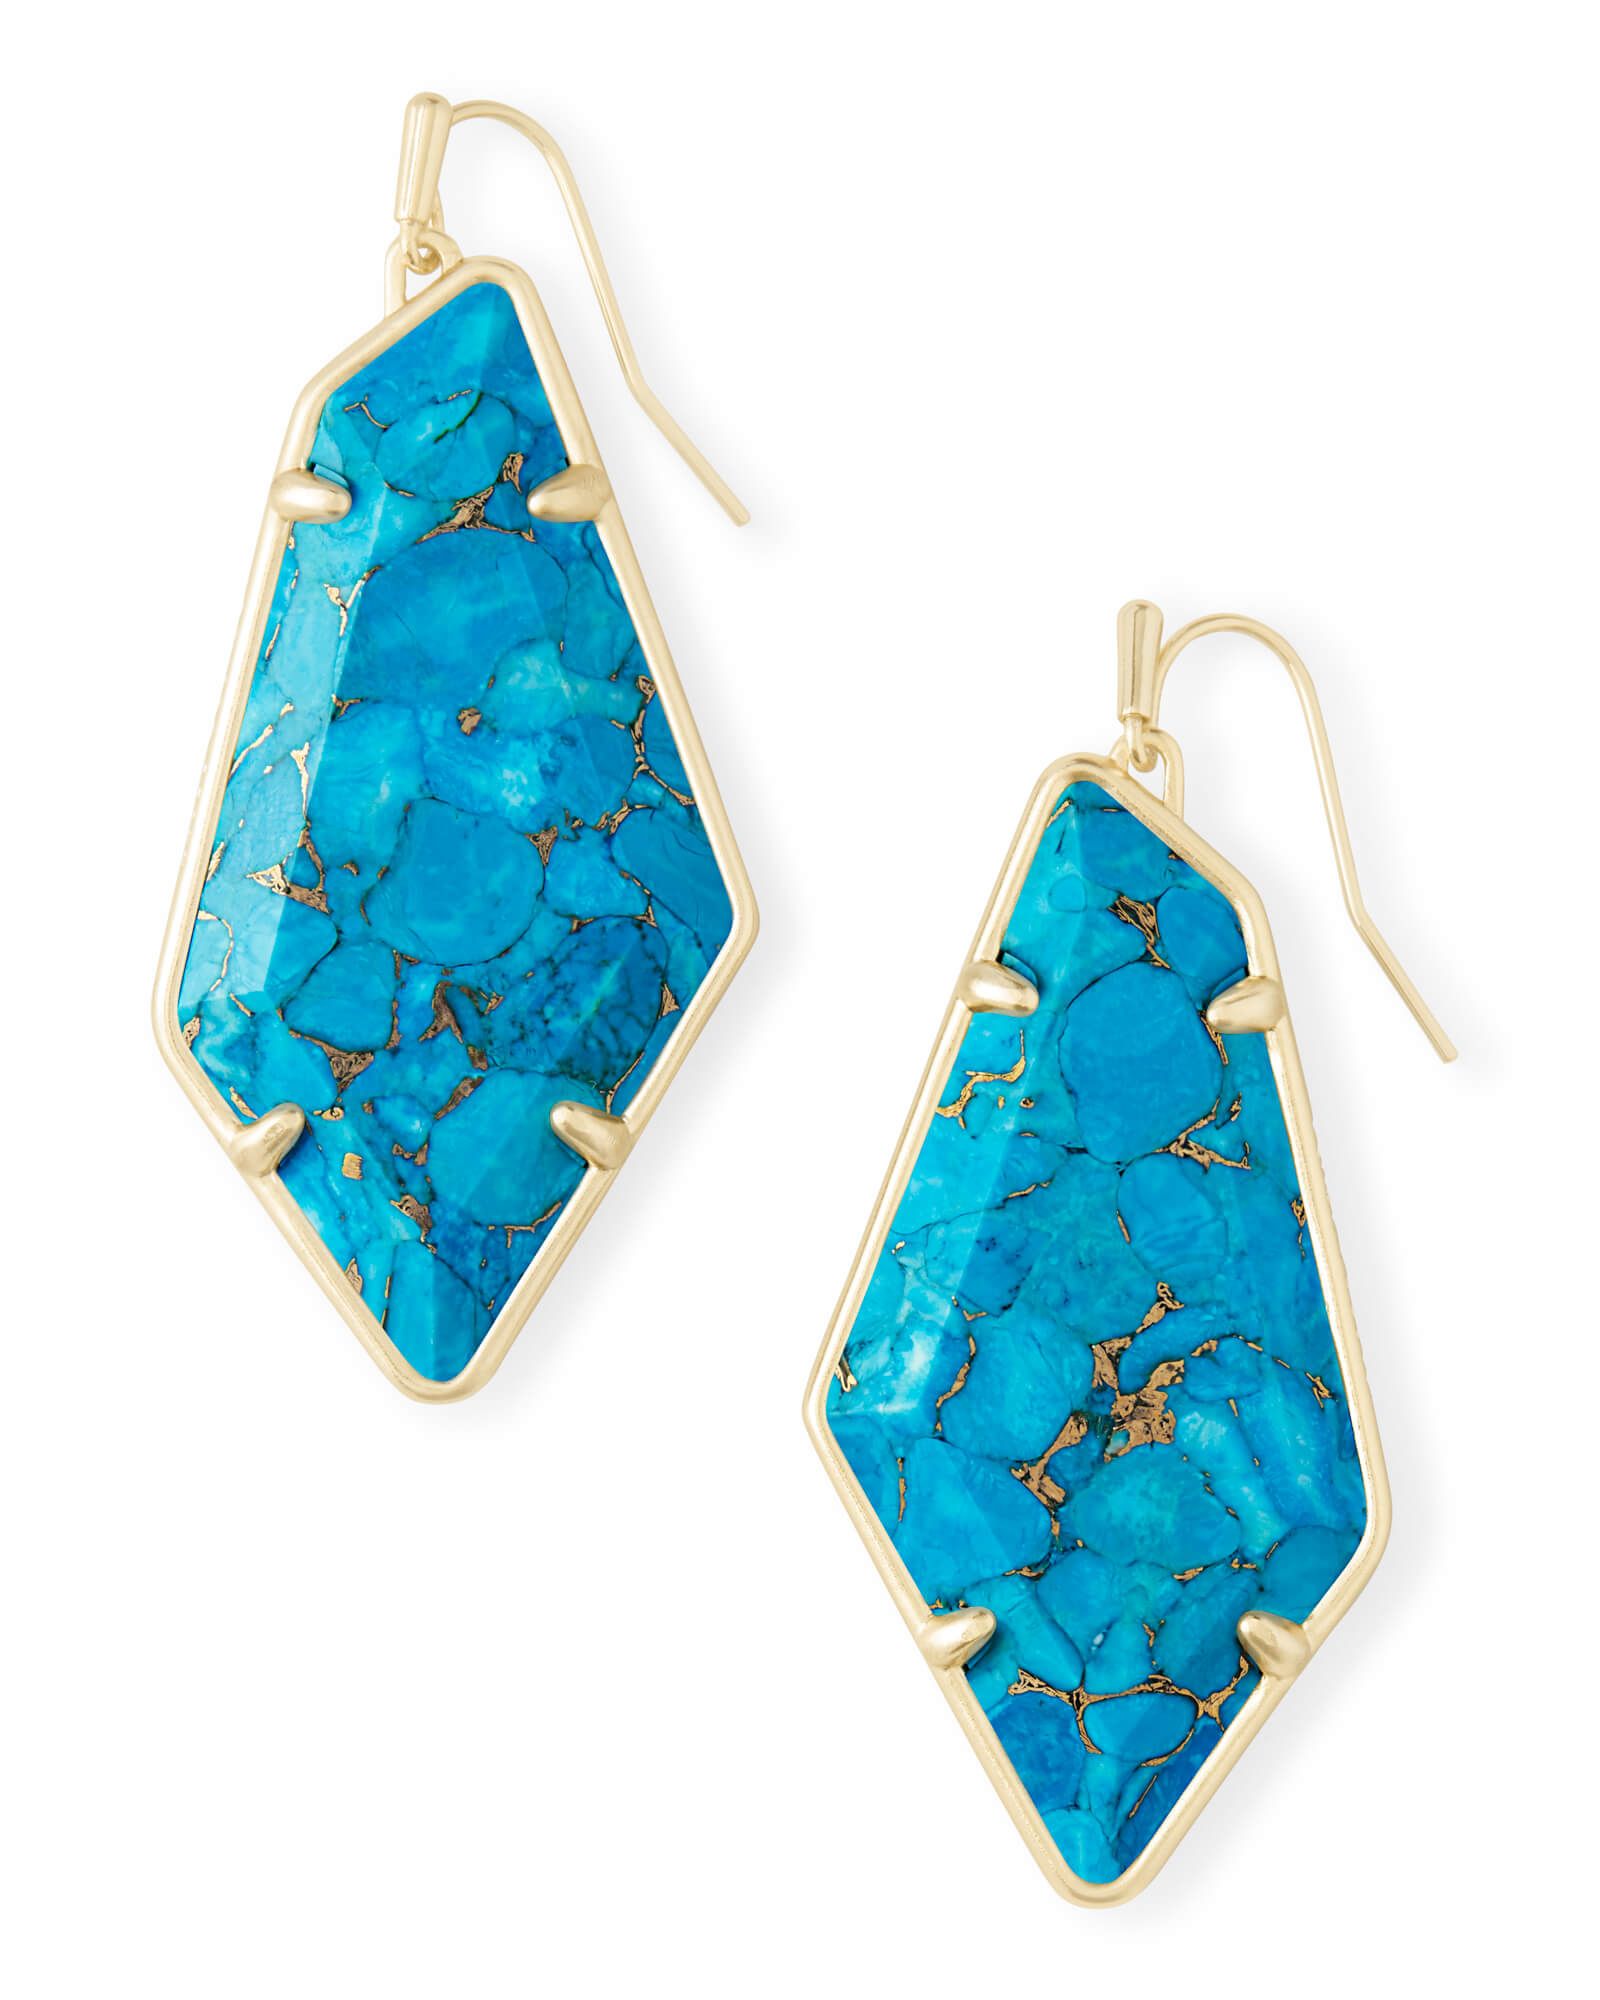 Emilia Gold Drop Earrings in Bronze Veined Turquoise Magnesite | Kendra Scott